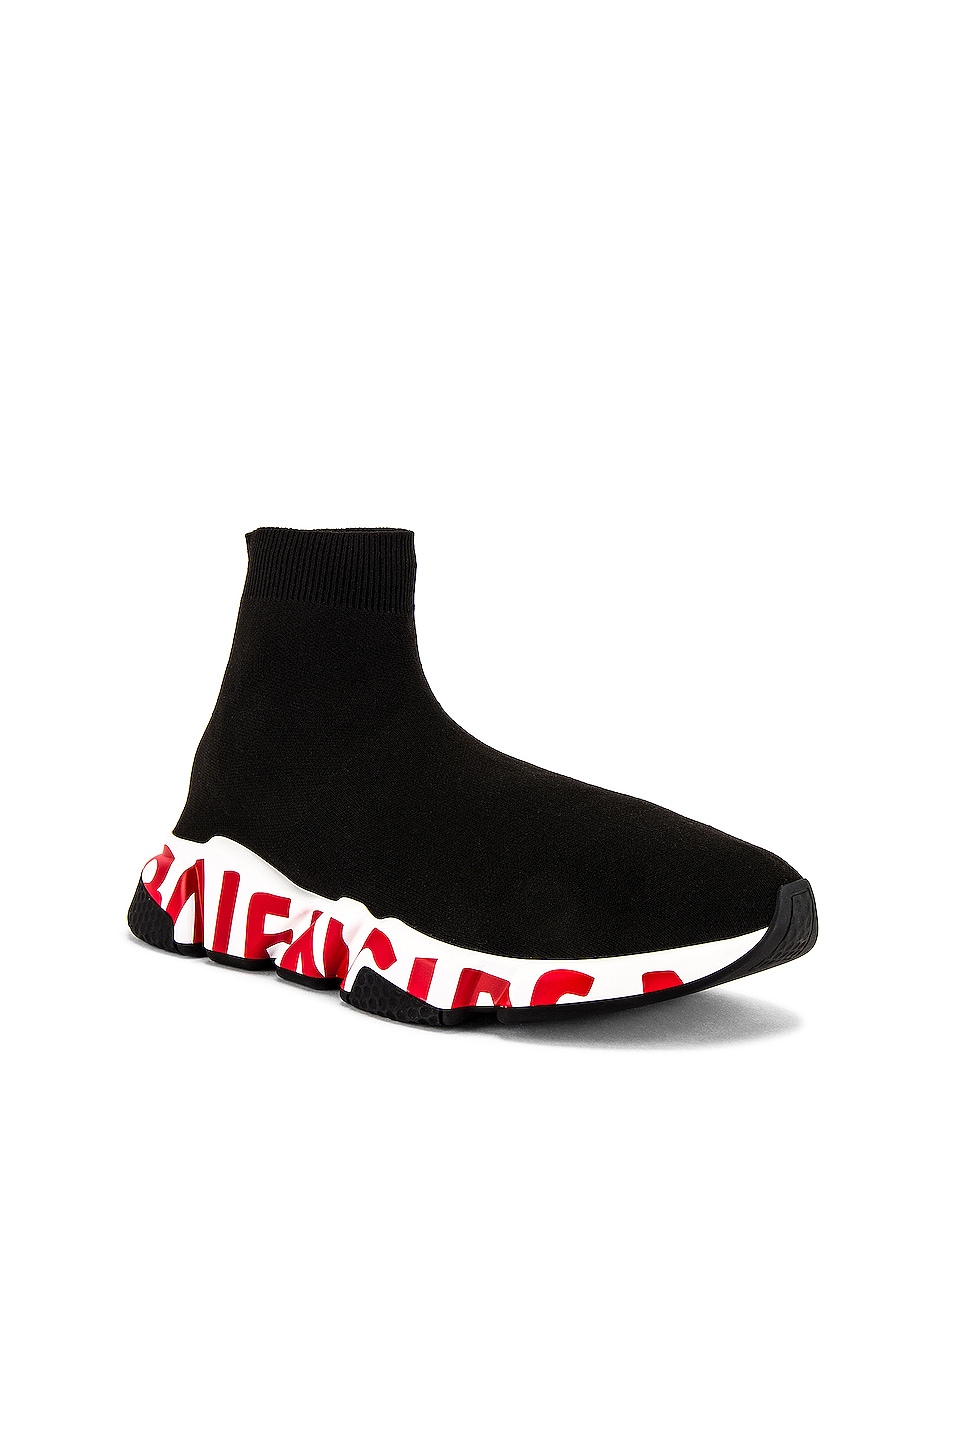 Balenciaga Speed Lt Sneaker in Black & White & Red | FWRD